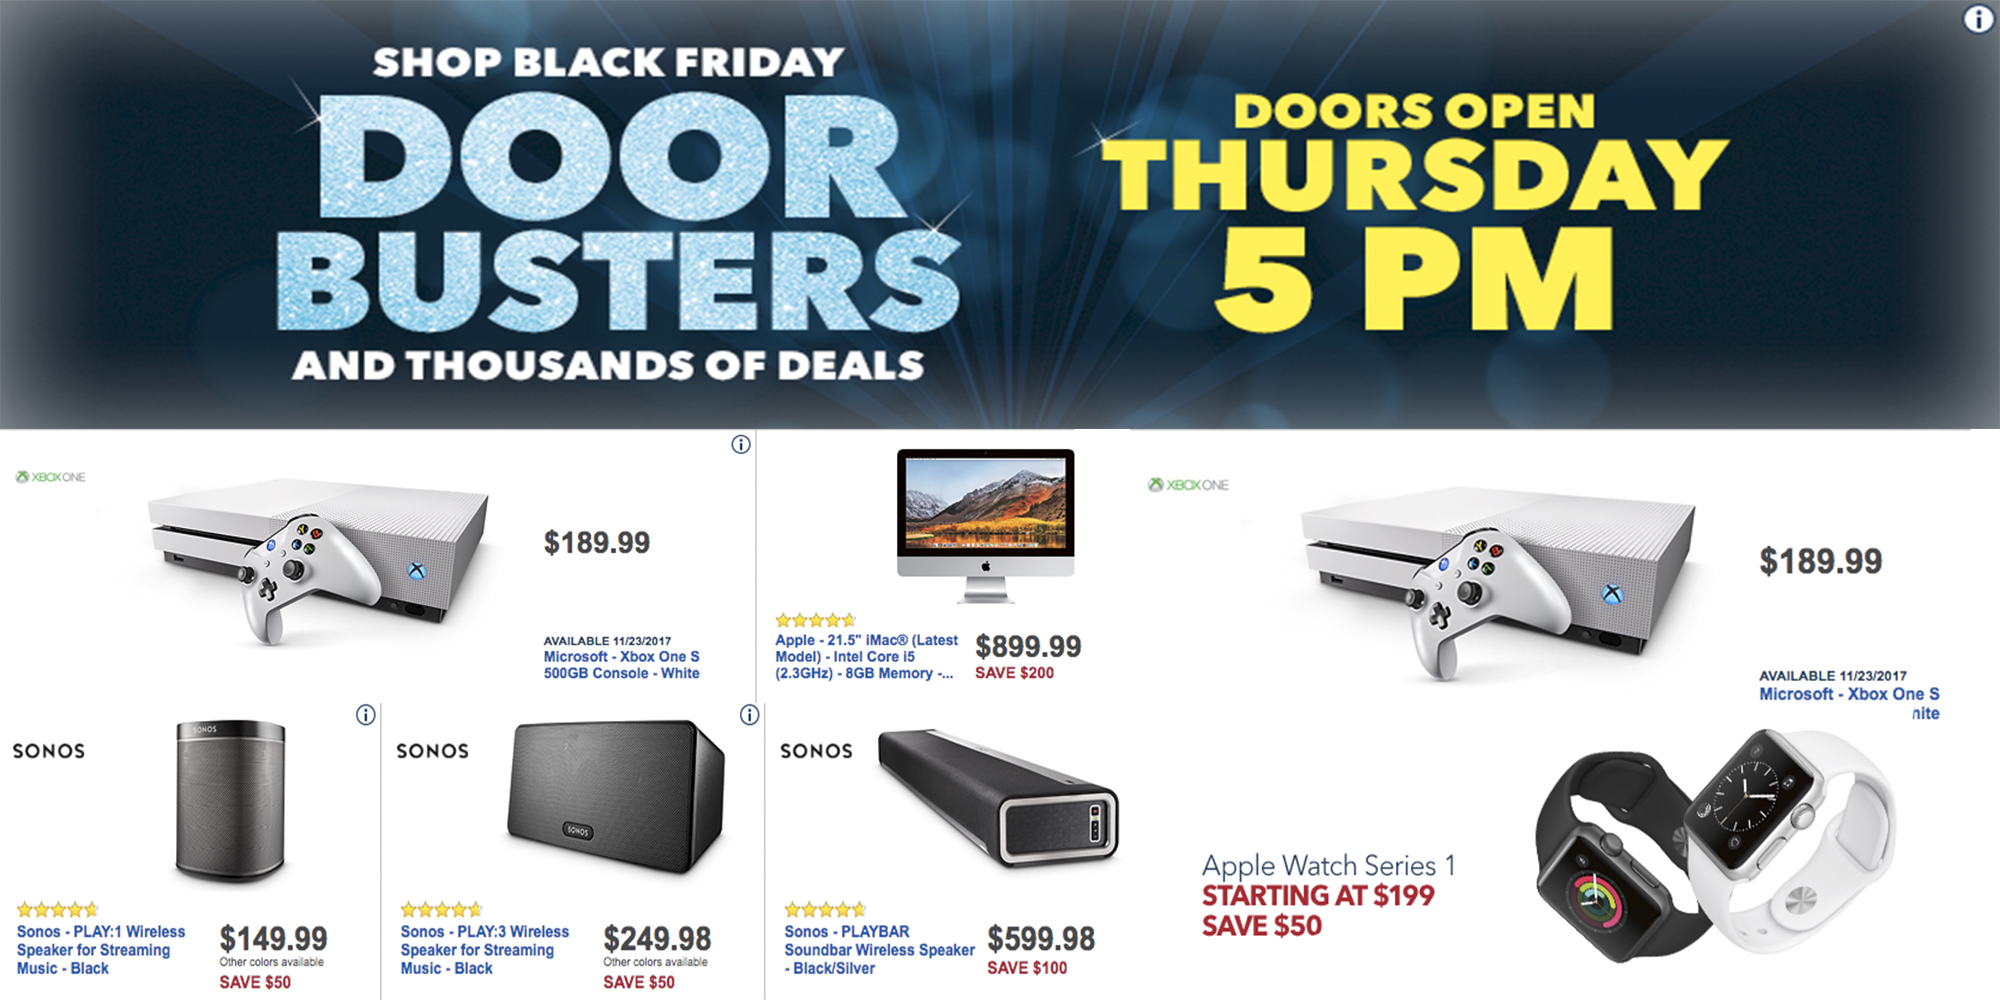 Best Buy Black Friday deals unveiled: Save big on laptops, TVs